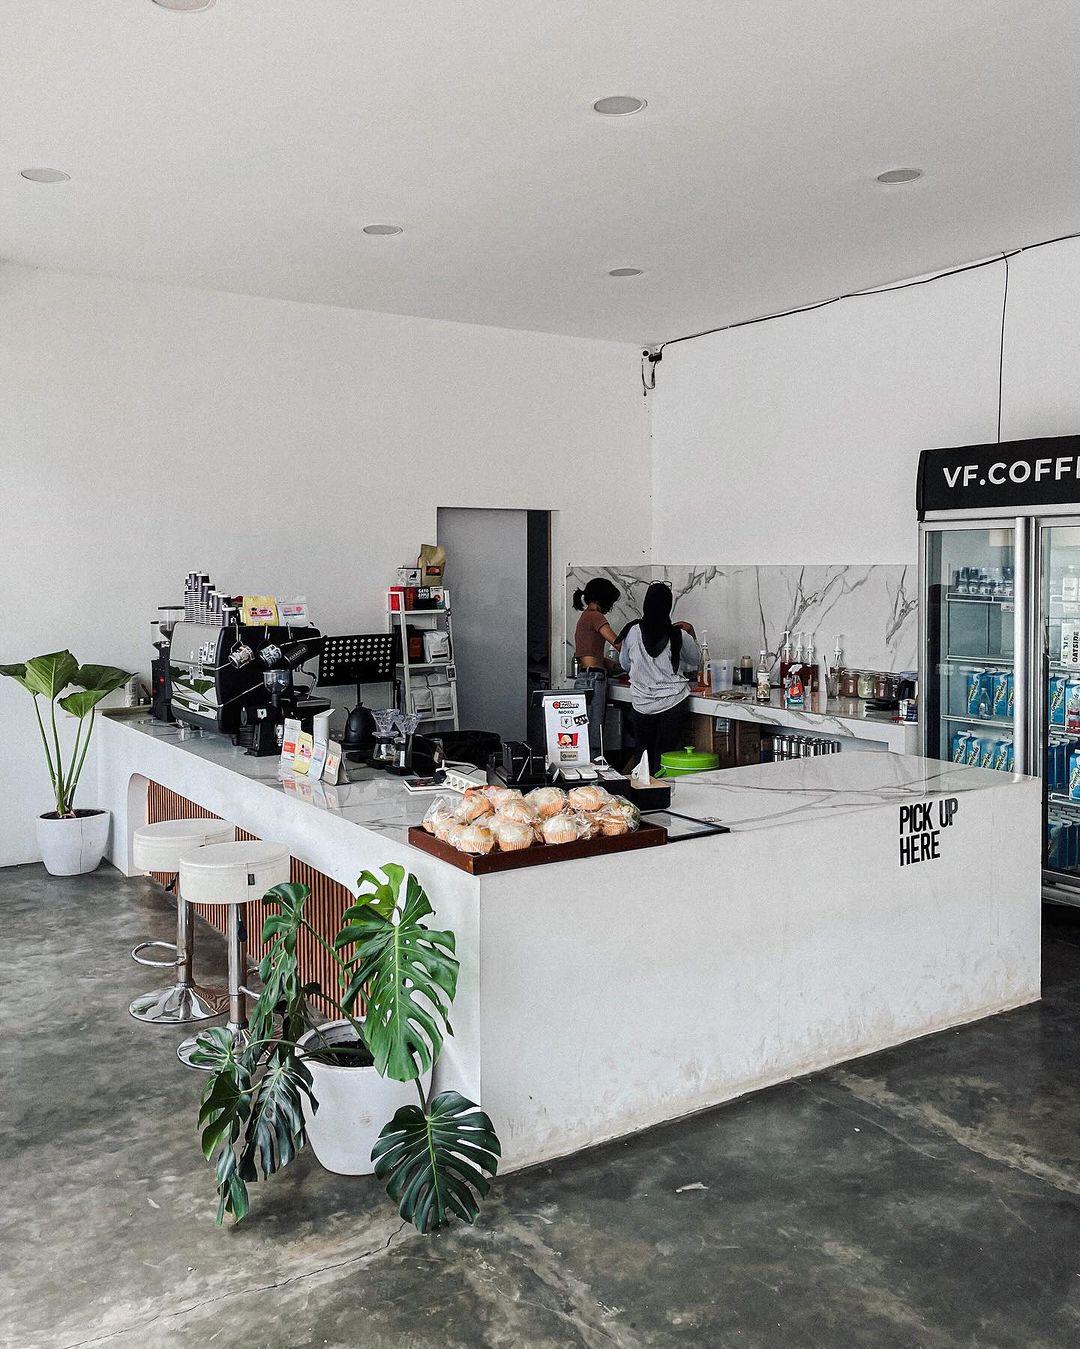 Daftar Harga Menu VF Coffee Bekasi Image From @m_azriansyah